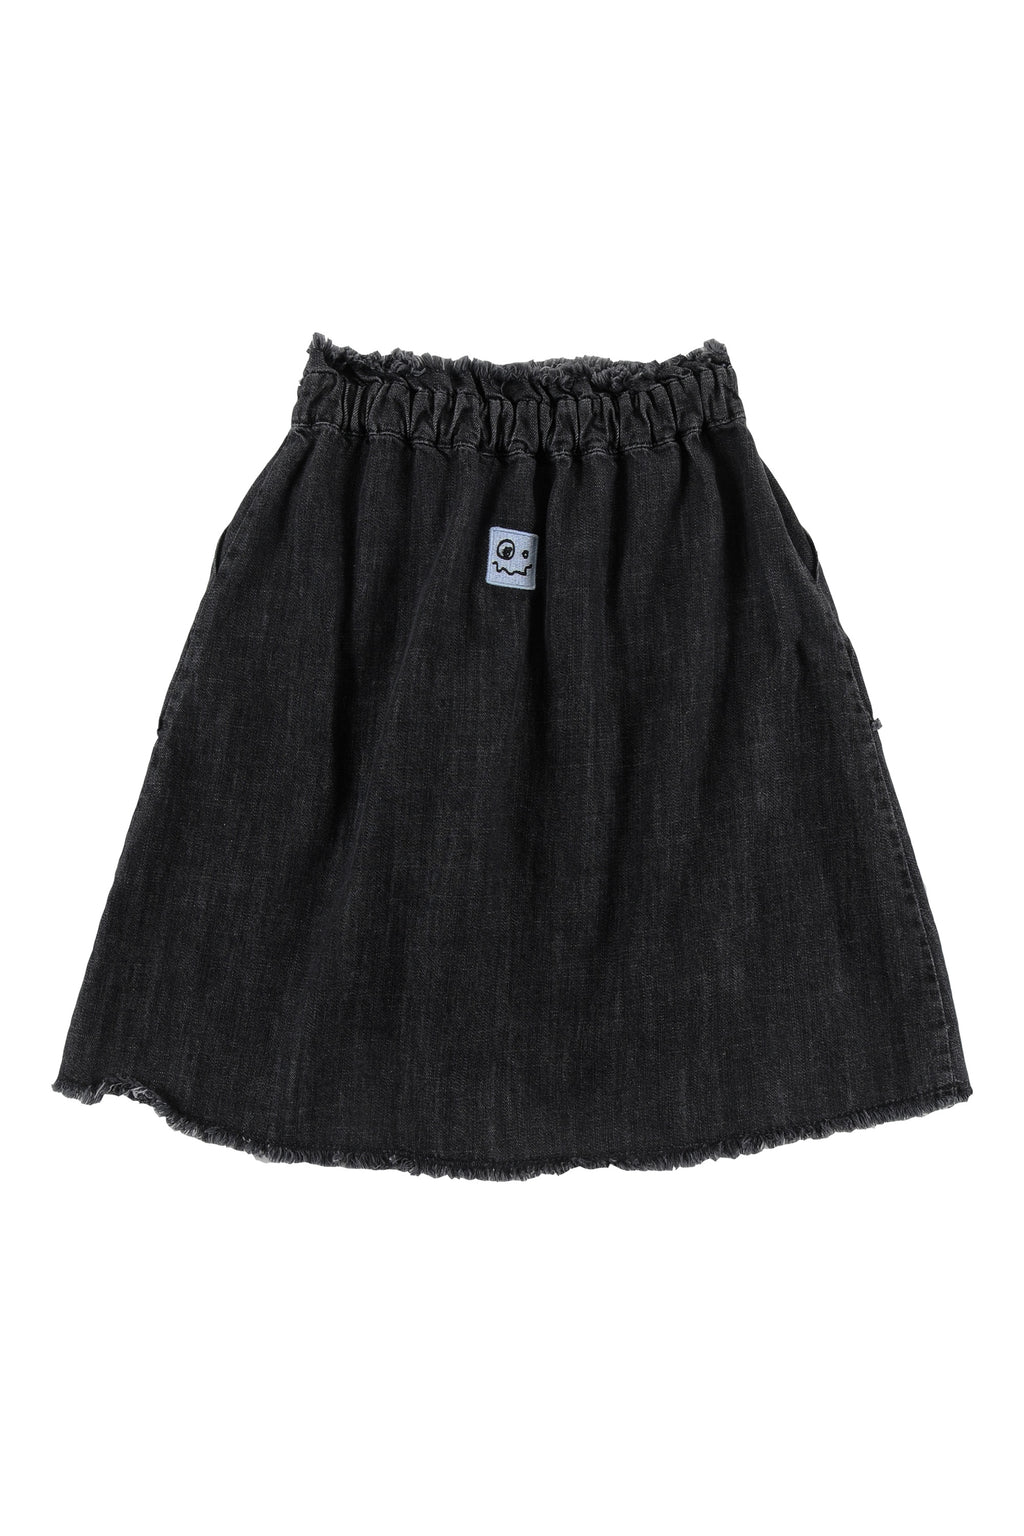 Loud Apparel Skirt - Black Acid Wash